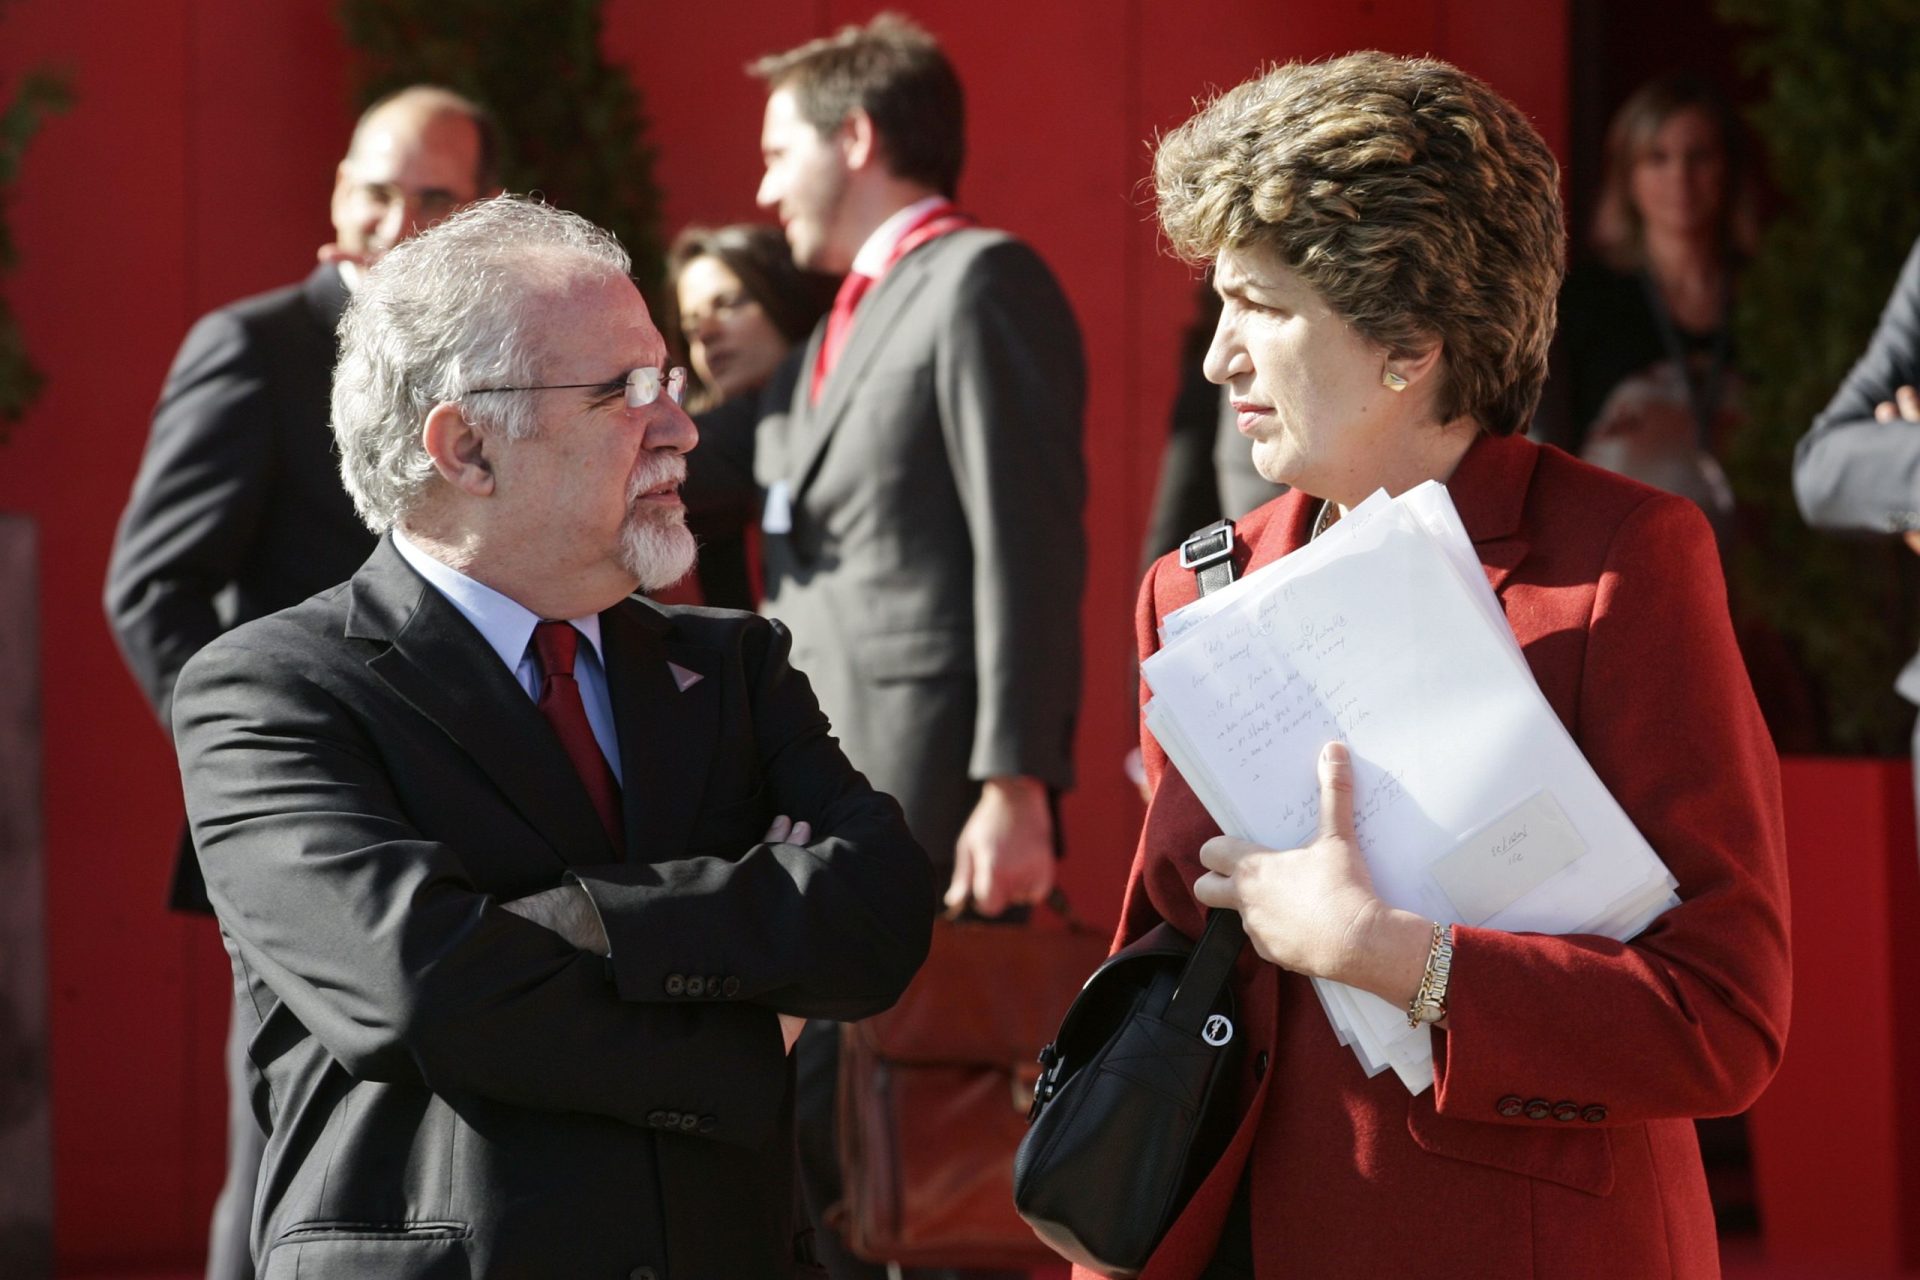 Eurodeputada portuguesa considerada culpada de assédio moral